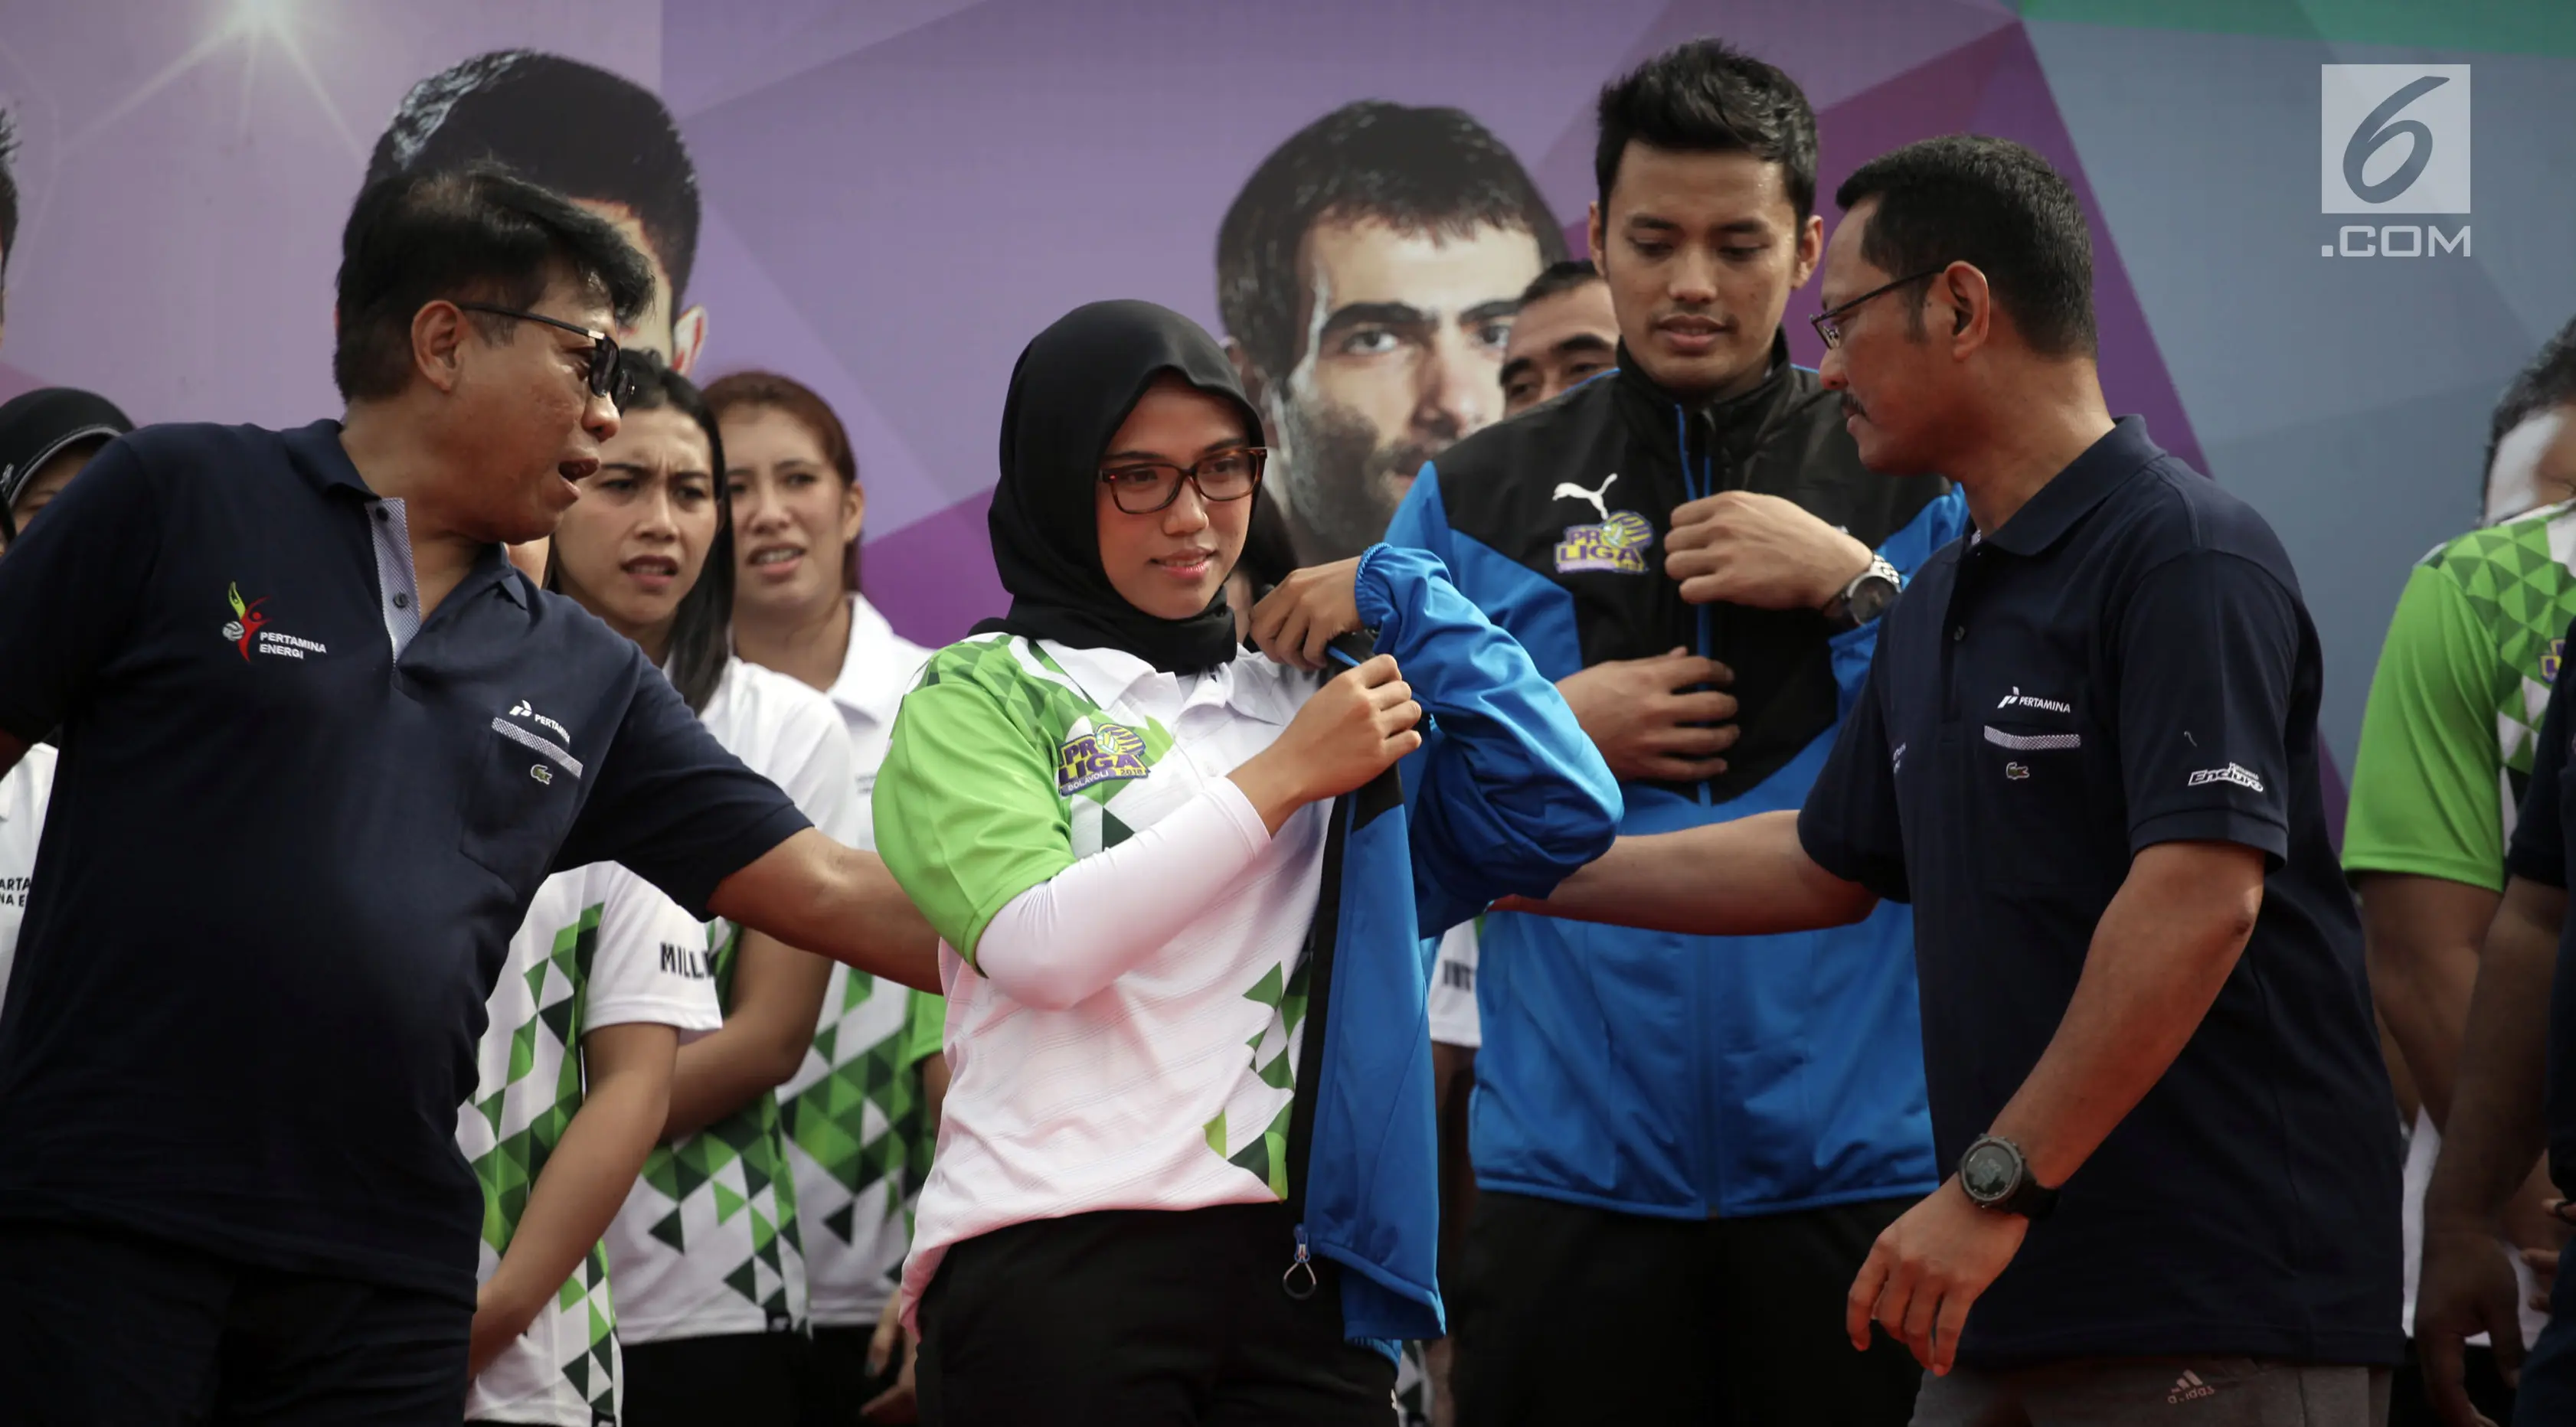 Direktur Manajemen Aset Pertamina Dwi Wahyu Daryoto mengenakan jaket kepada pemain putri saat Launching Tim Bola Voli Jakarta Pertamina Energi di Kantor Pusat Pertamina, Jakarta, Jumat (5/1).(/Arya Manggala)